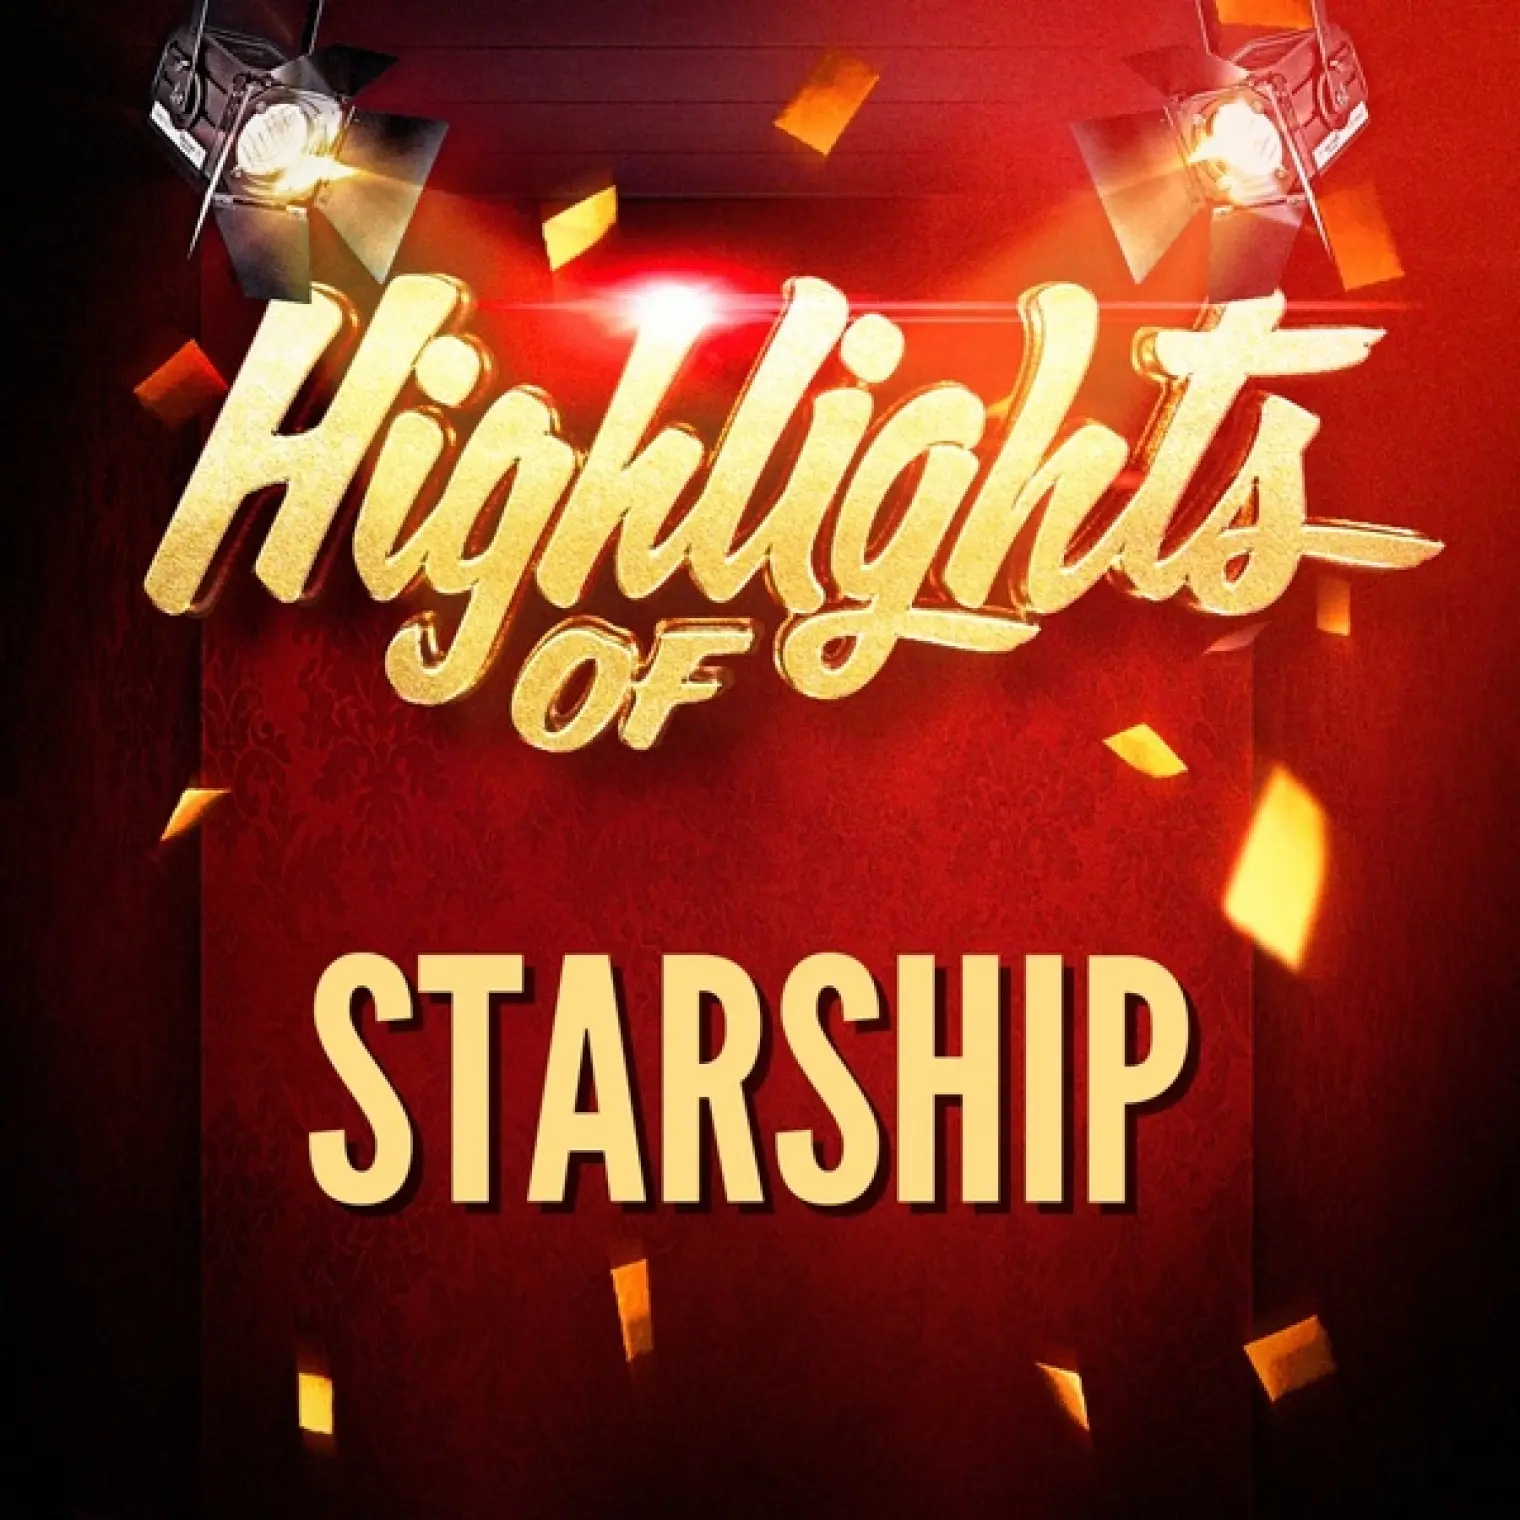 Highlights of Starship -  Starship 